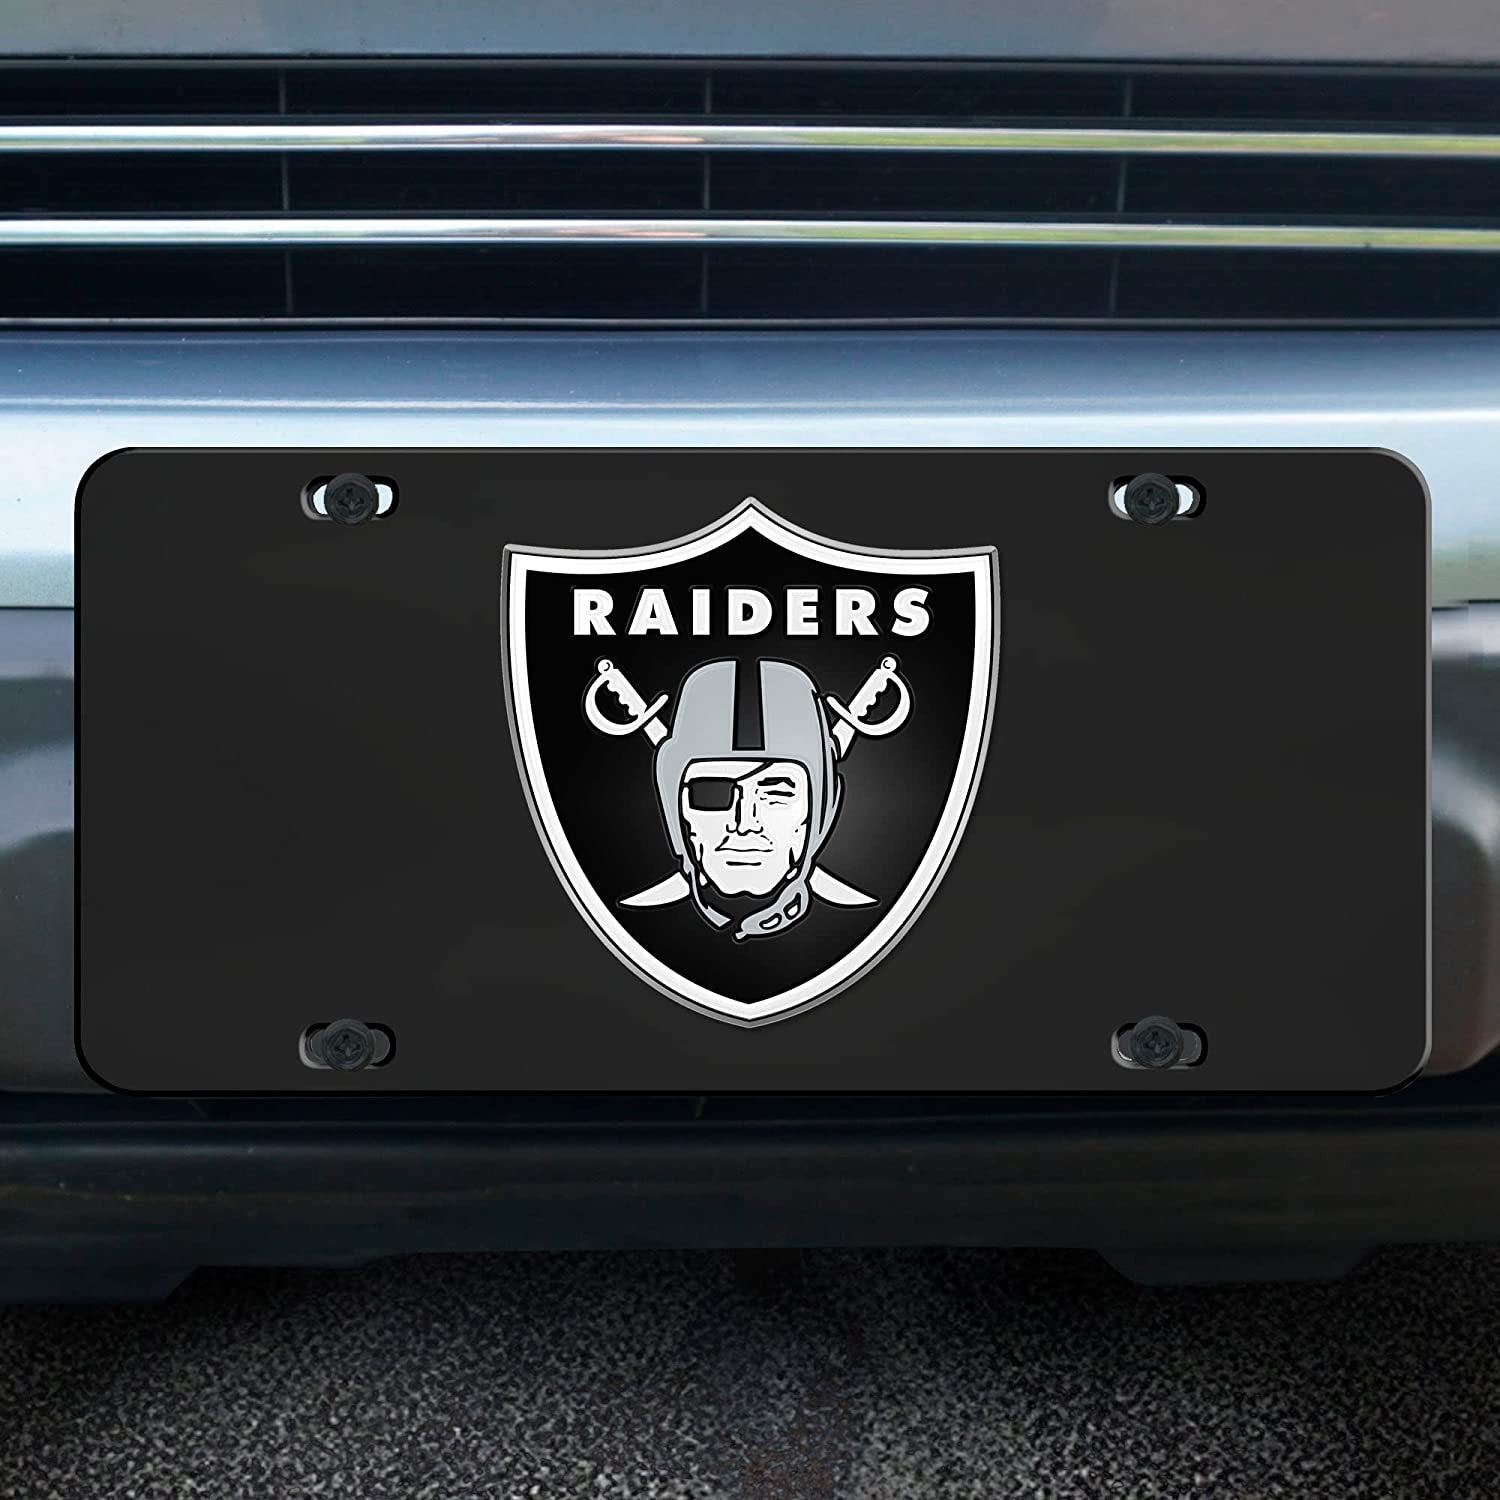 Las Vegas Raiders License Plate Tag, Premium Stainless Steel Diecast, Black, Raised Solid Metal Color Emblem, 6x12 Inch